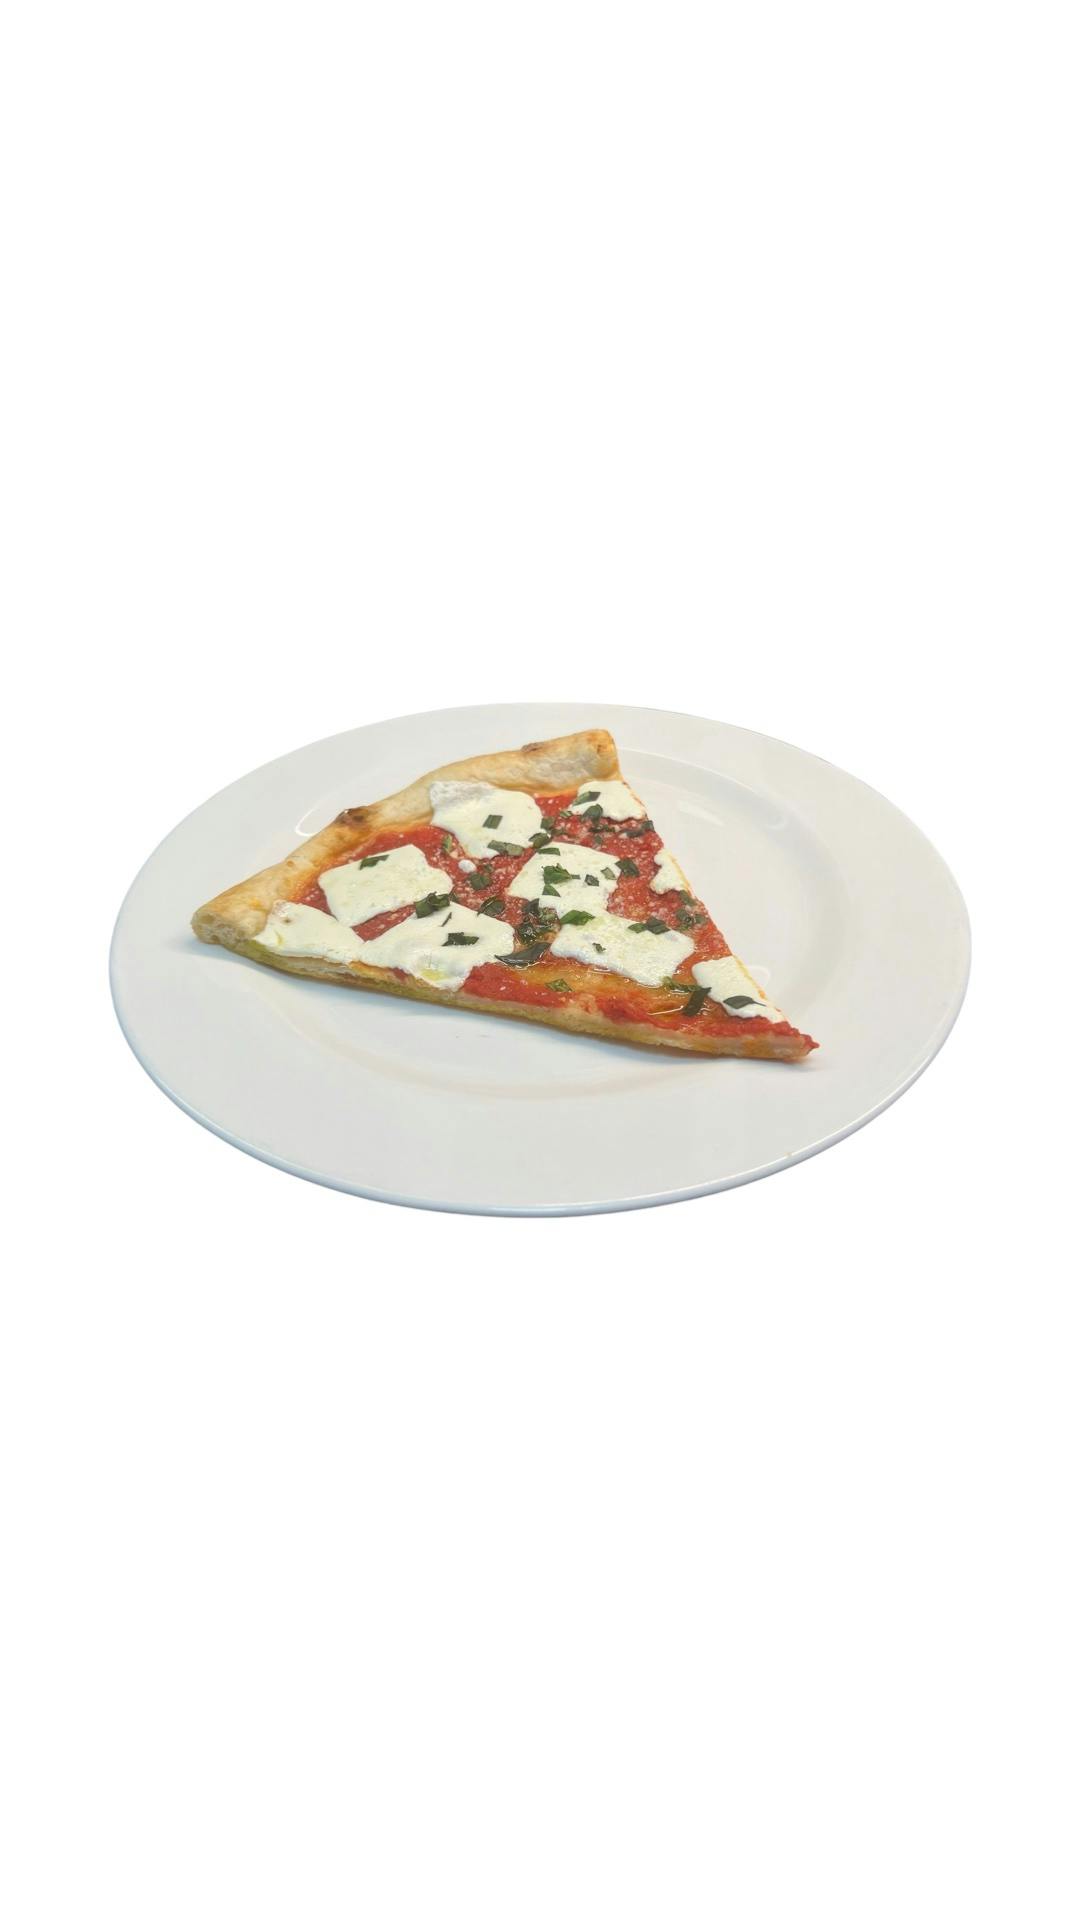 Margherita Slice from Mario's Pizzeria in Seaford, NY